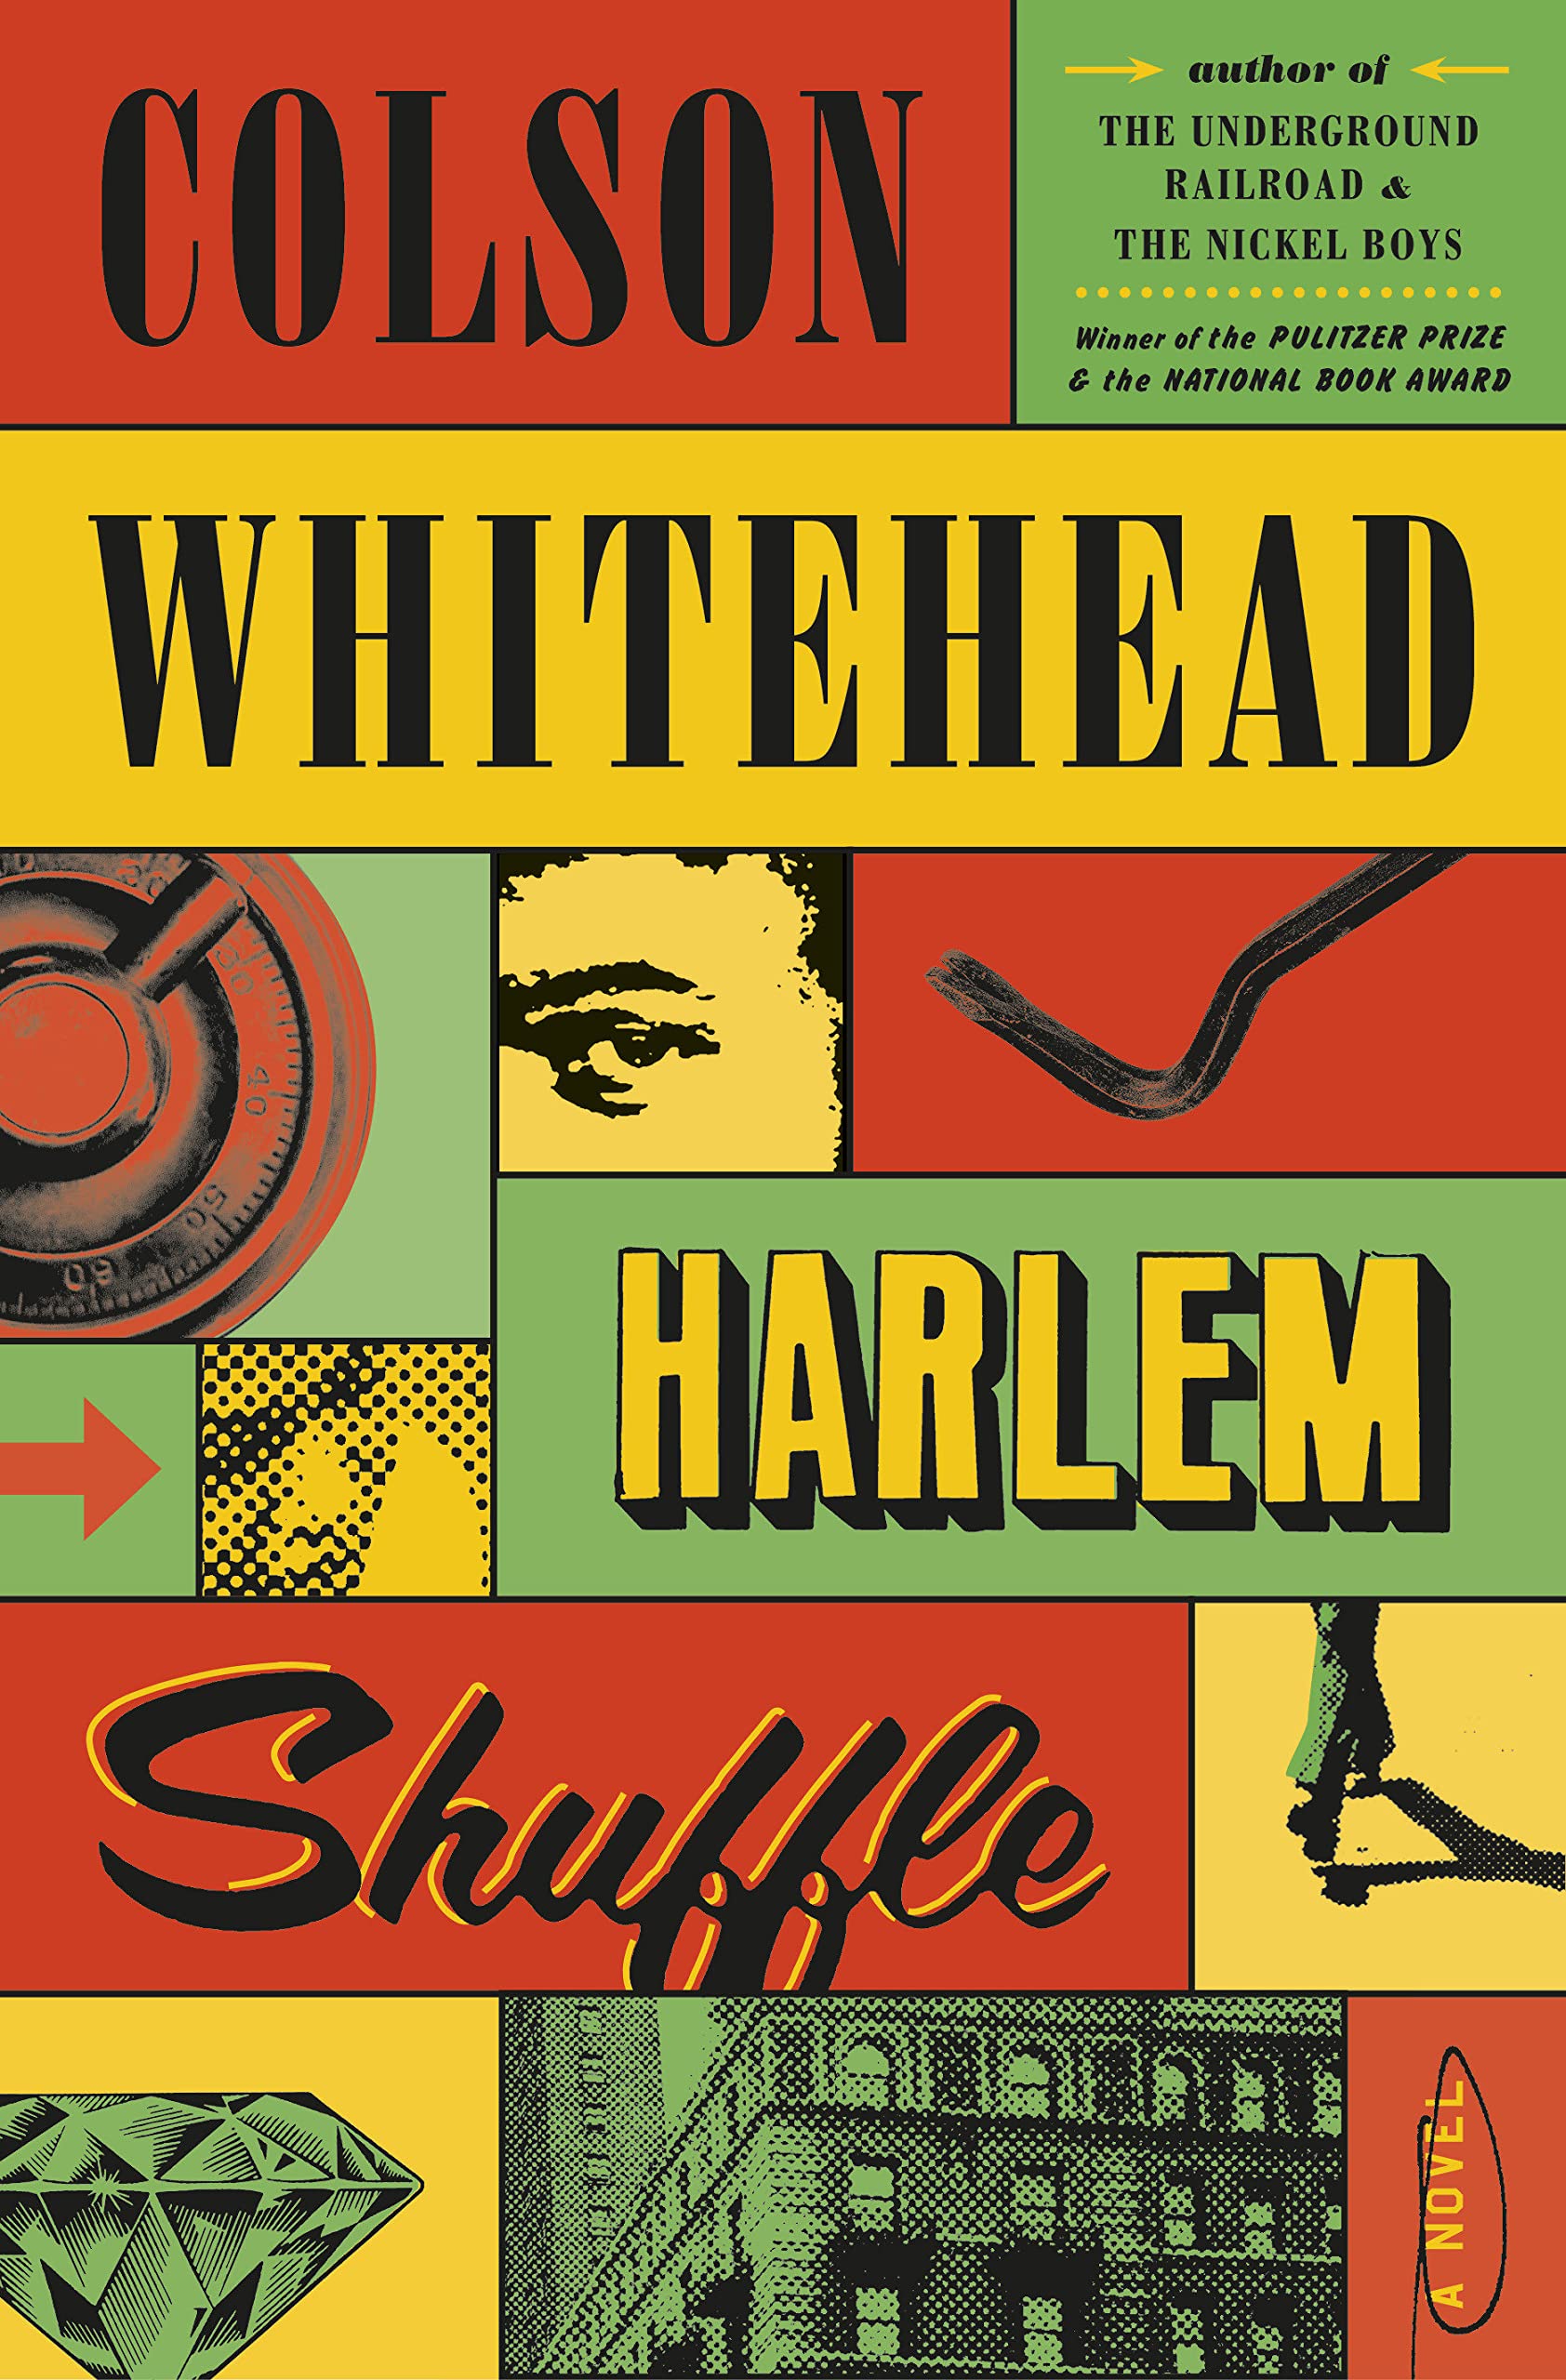 Harlem Shuffle: A Novel Hardcover by Colson Whitehead